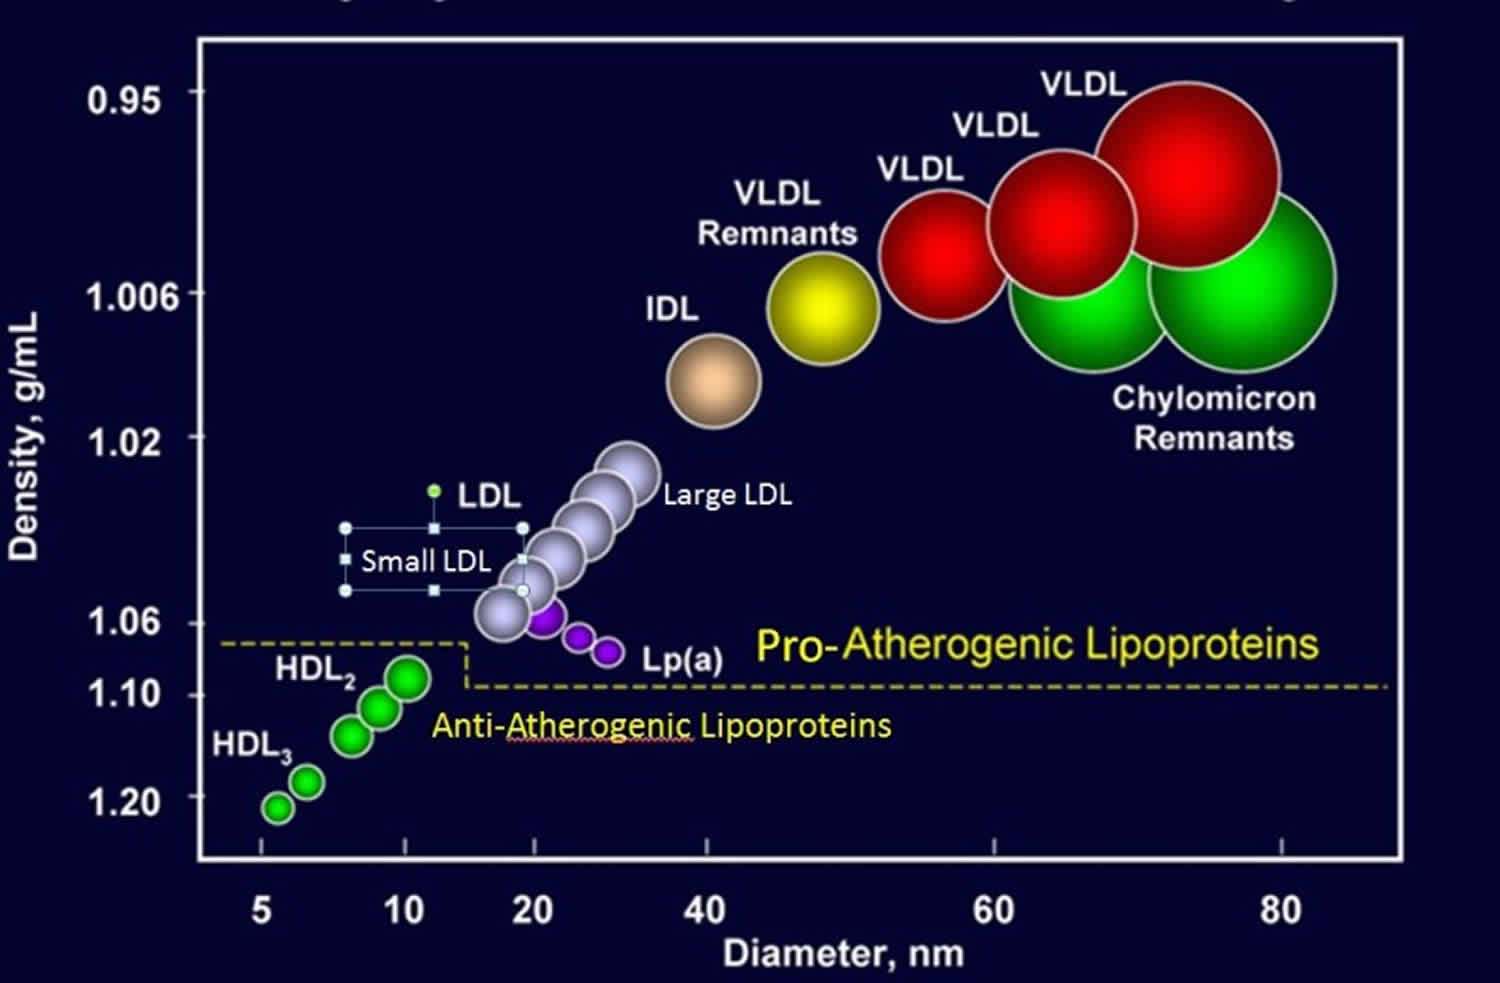 Lipoprotein function, types, lipoprotein